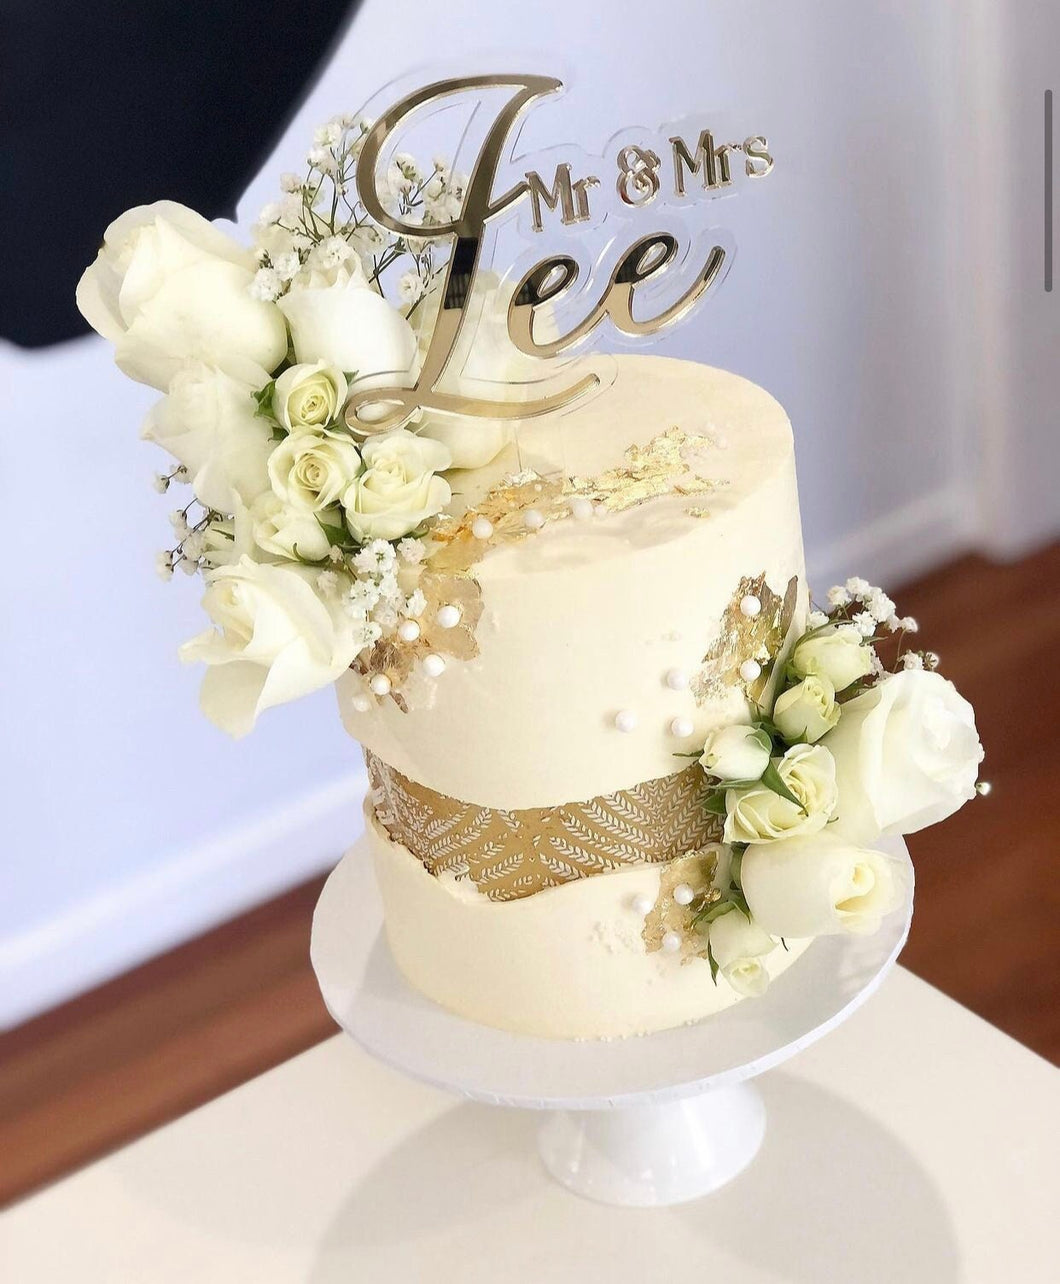 Wedding Cake Topper / Engagement Cake decor / Modern Cake topper / Gold Mirror floating cake topper /